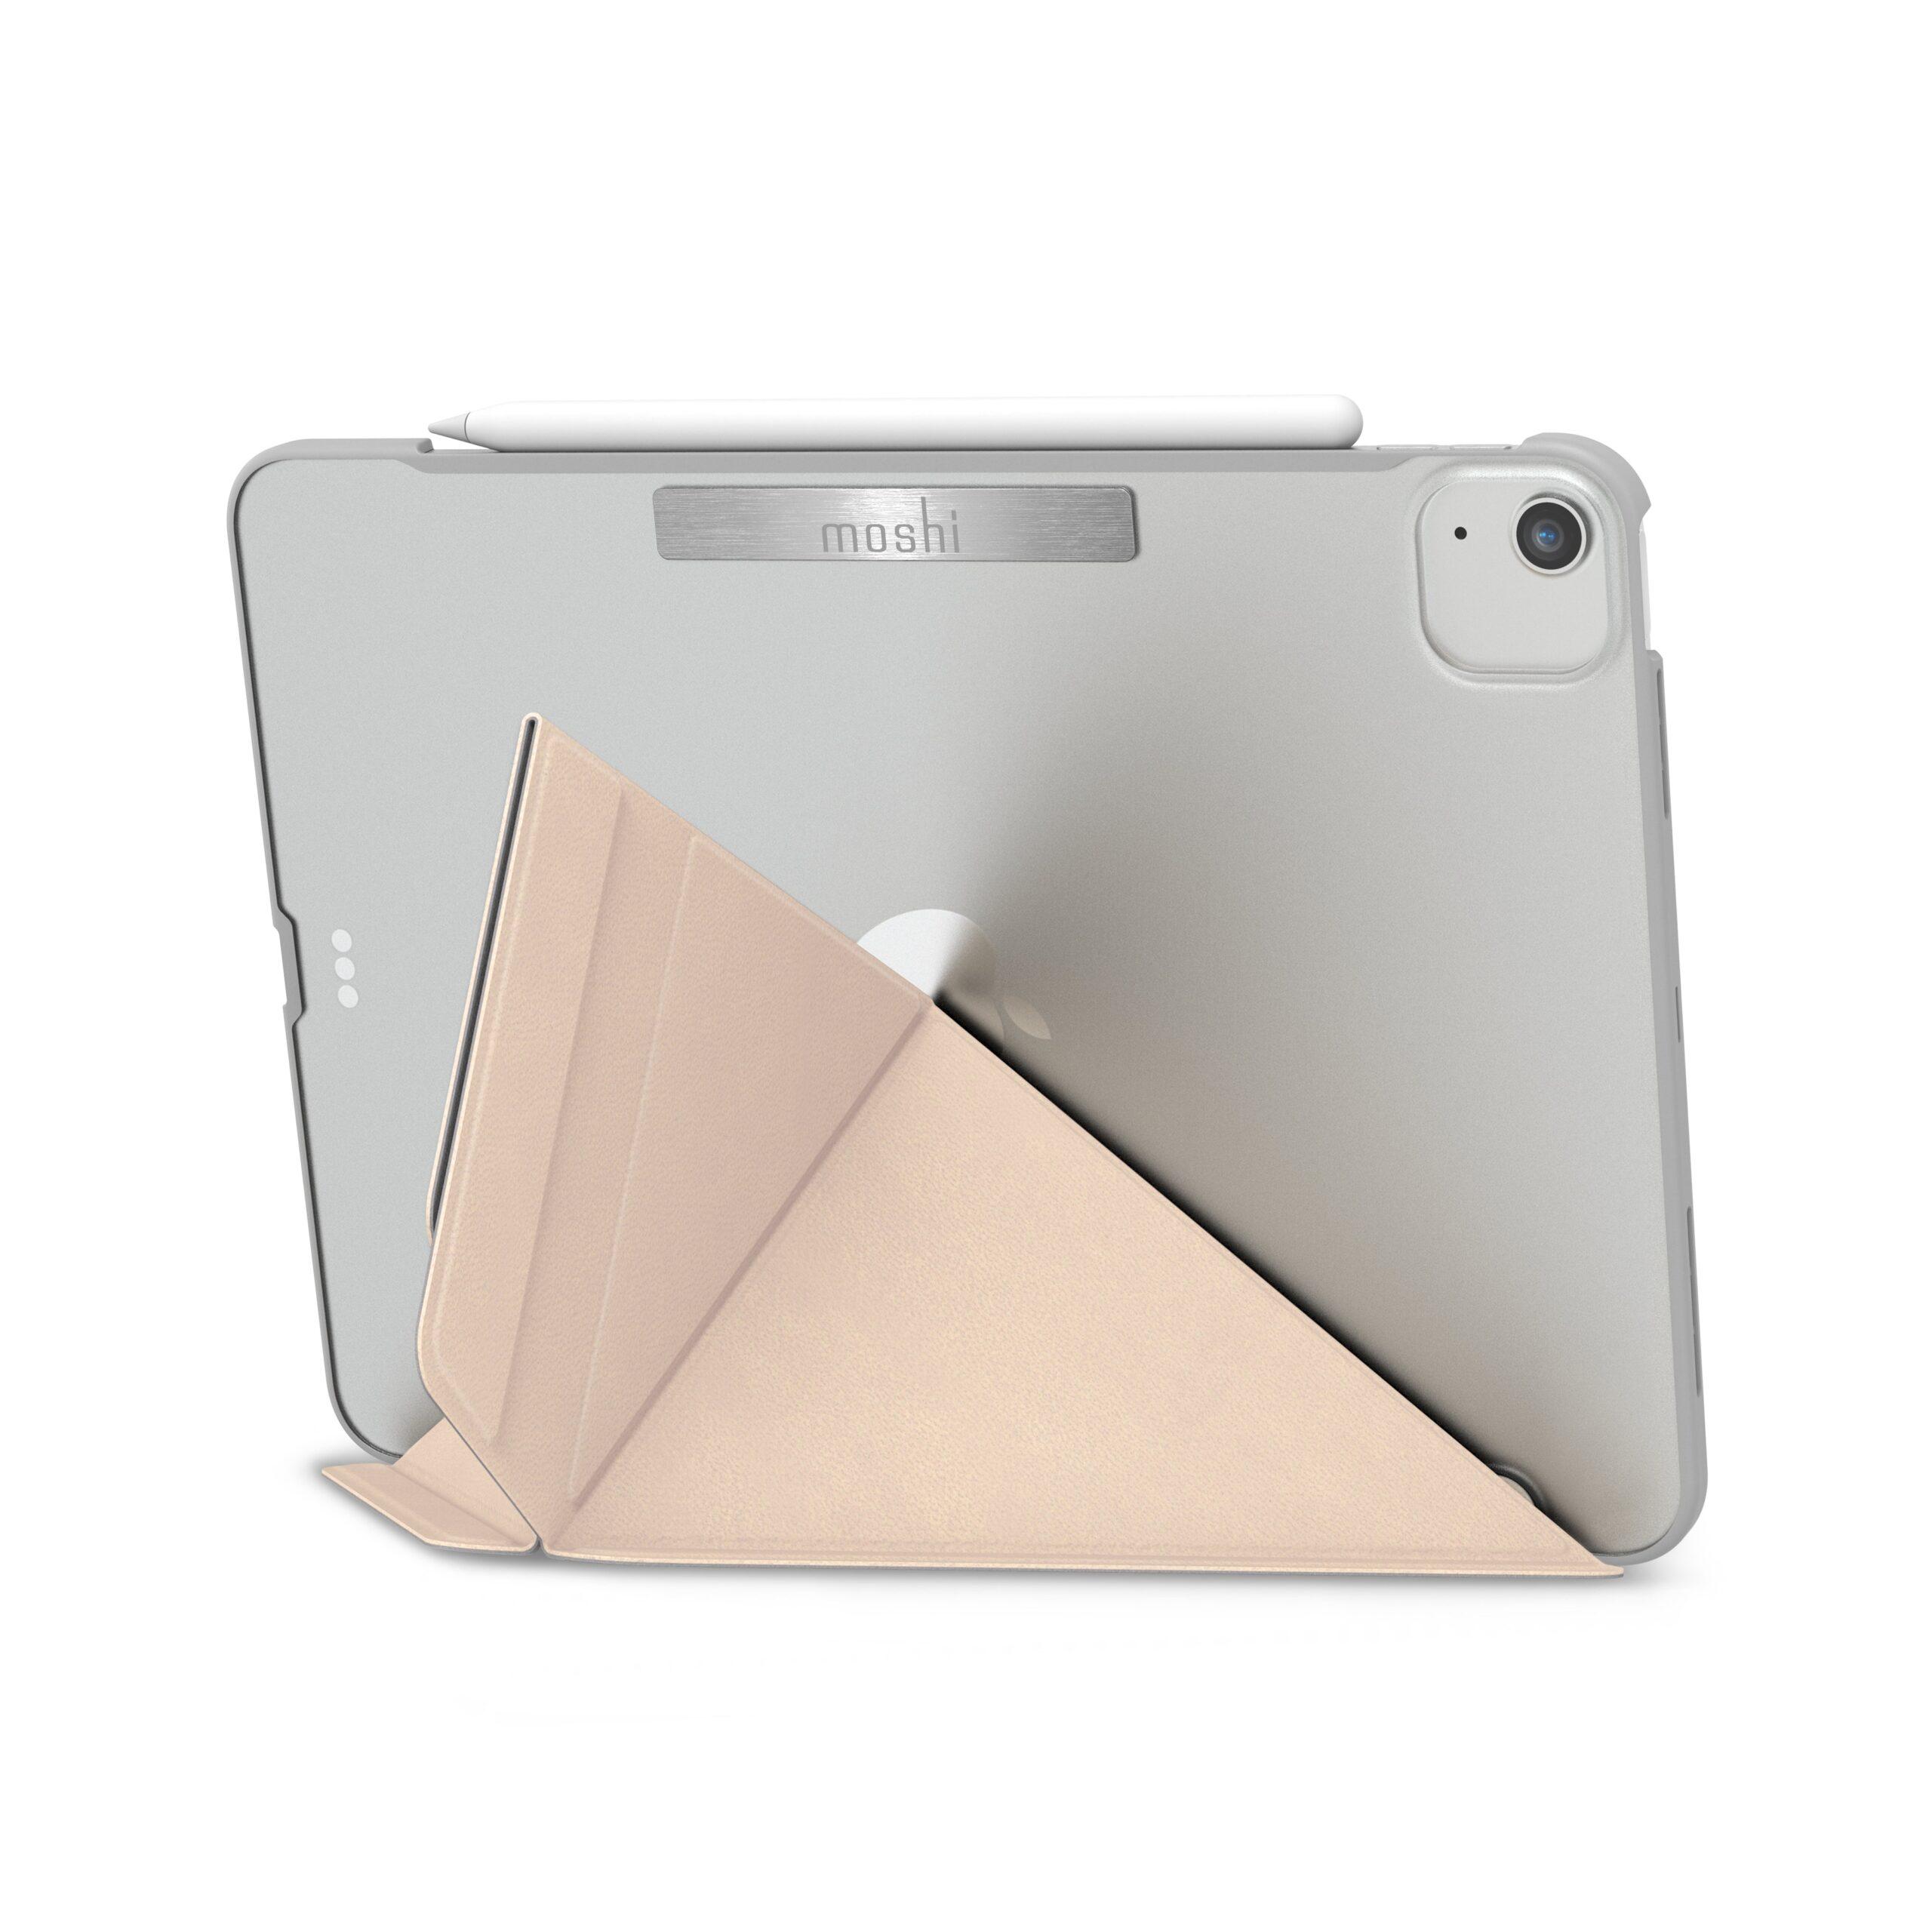 كفر آيباد قياس 11 إنش لون سكري VersaCover Case for iPad Air/iPad Pro -  Moshi - cG9zdDozNjM0Mjk=